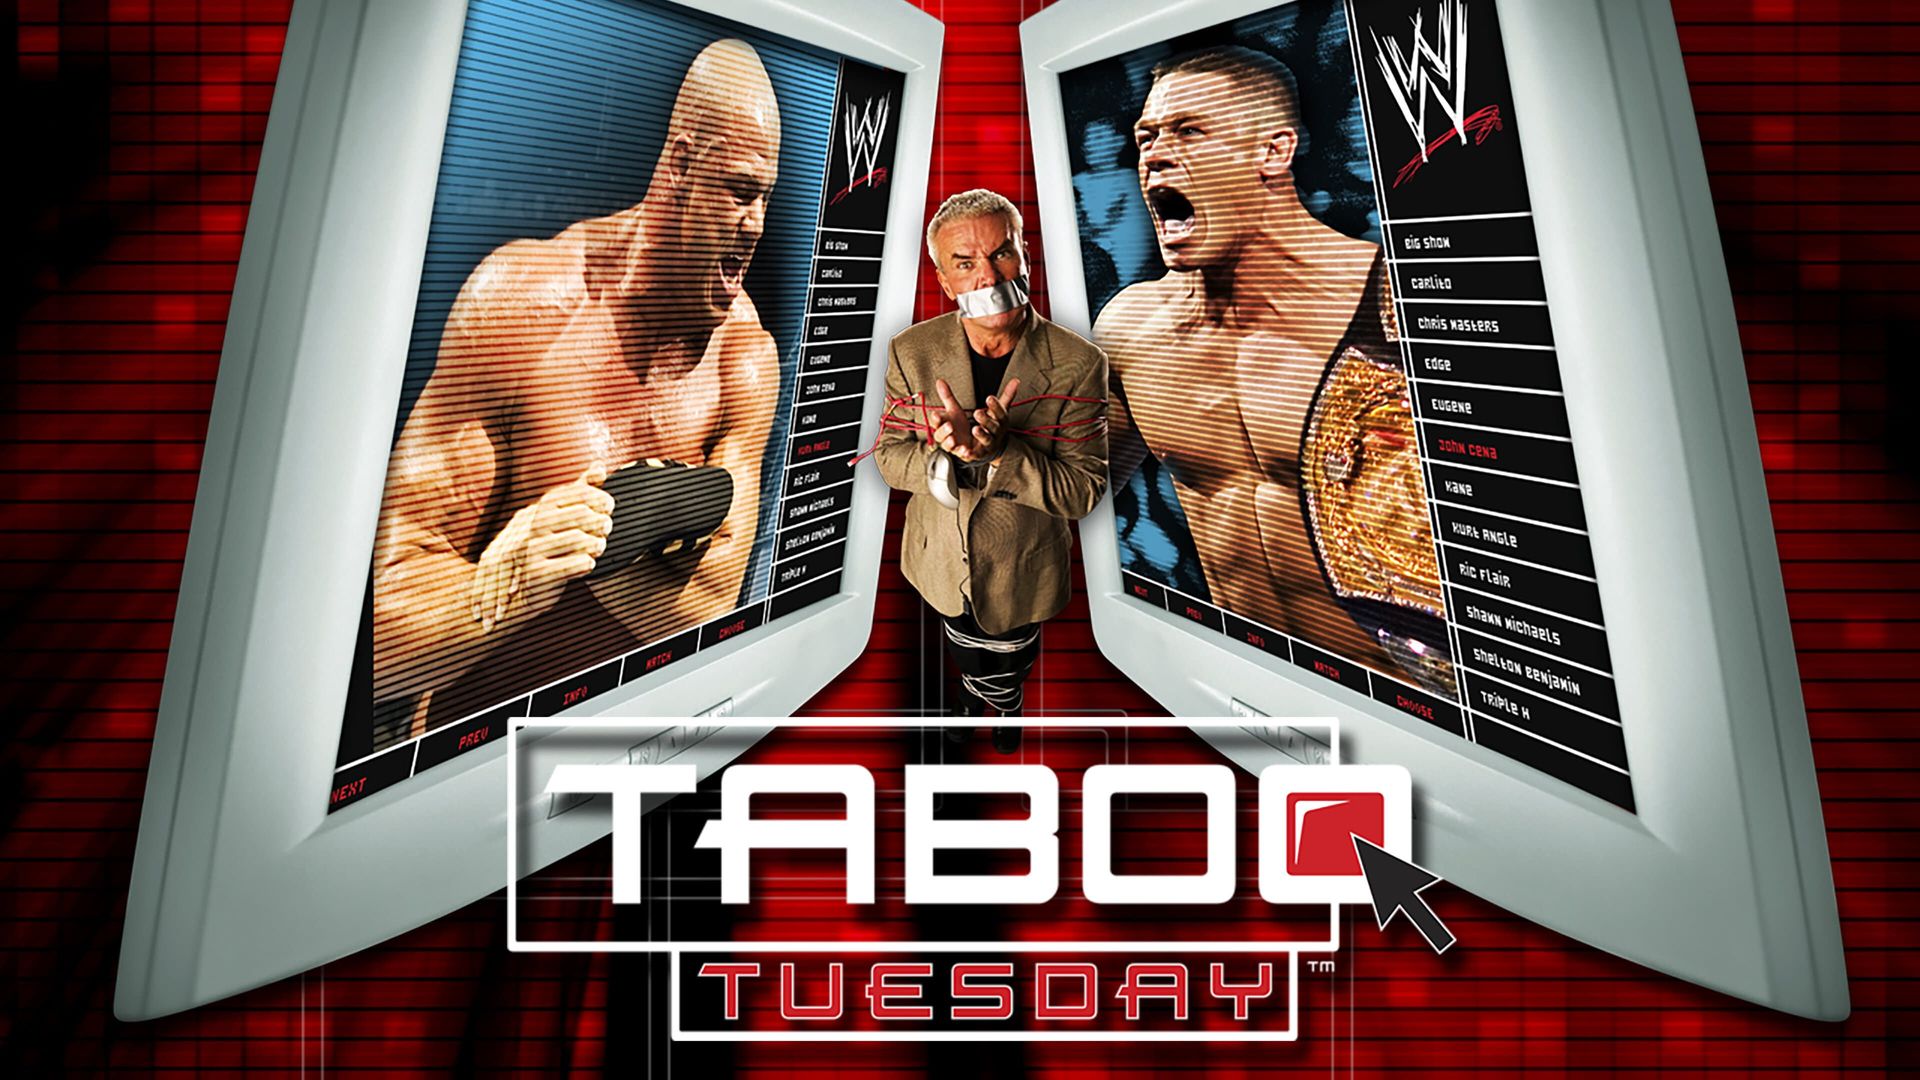 WWE Taboo Tuesday background